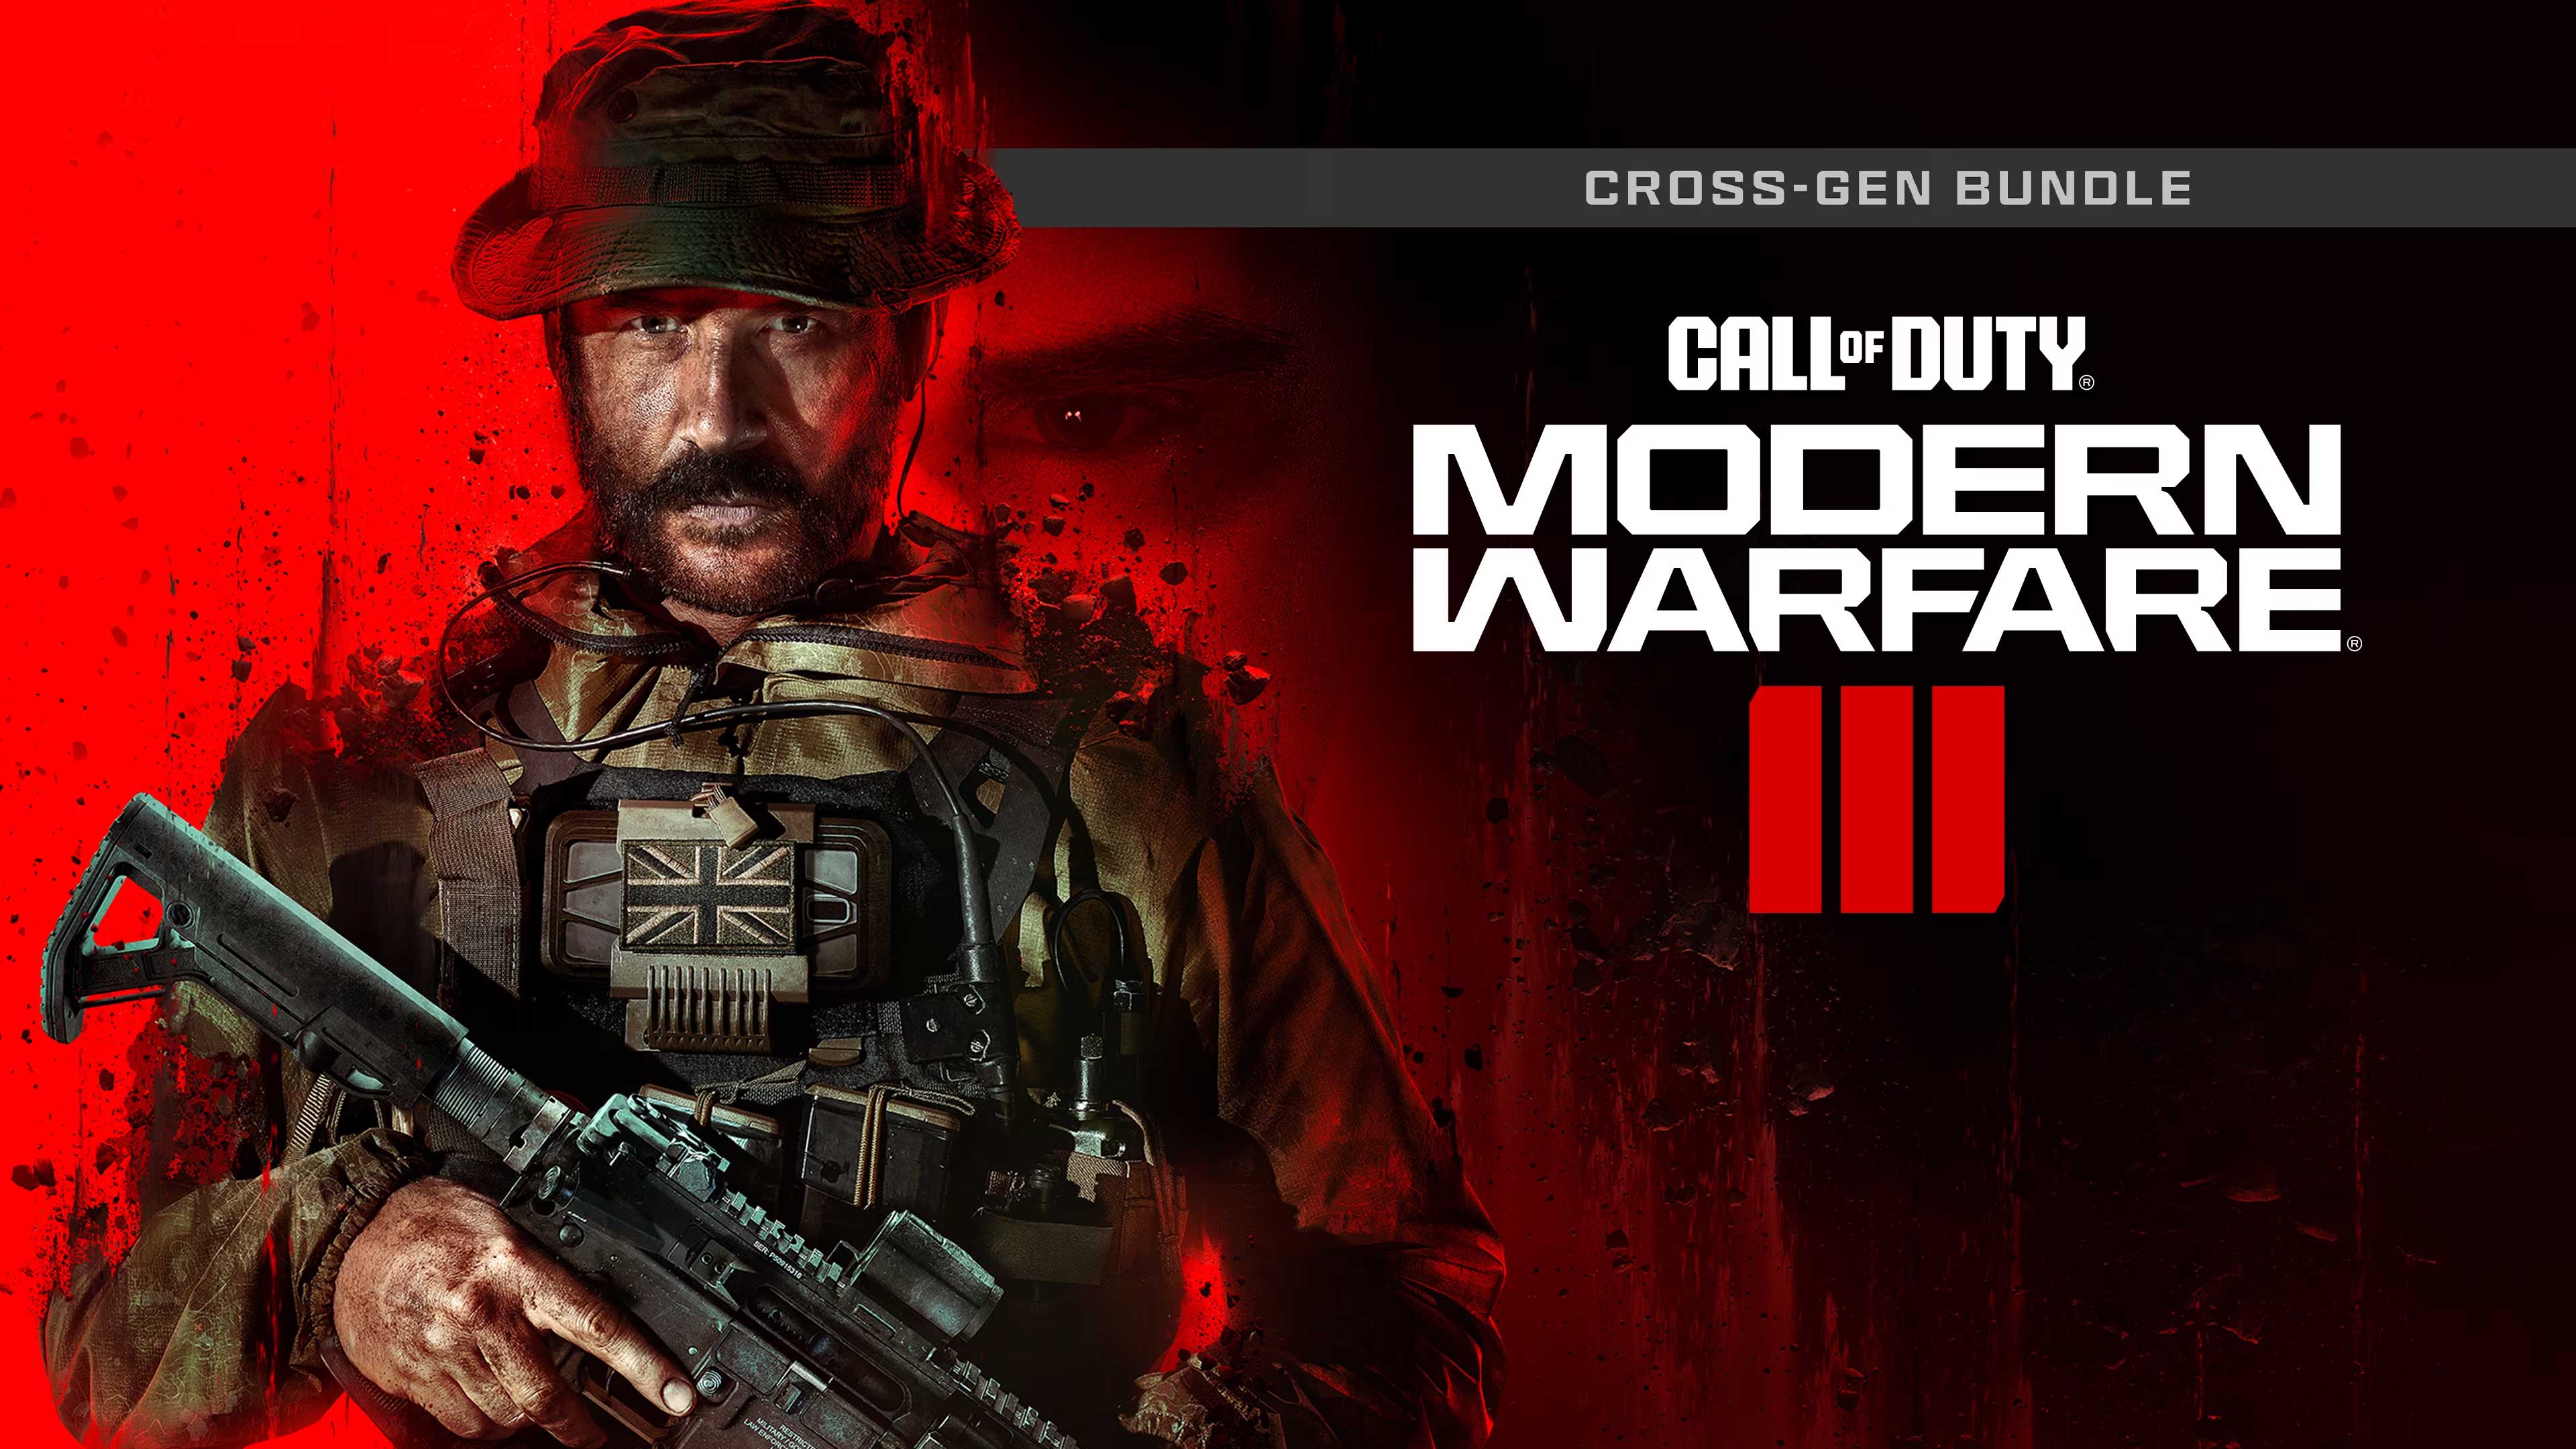 Call of Duty: Modern Warfare III - Cross-Gen Bundle, Game To Relax, gametorelax.com